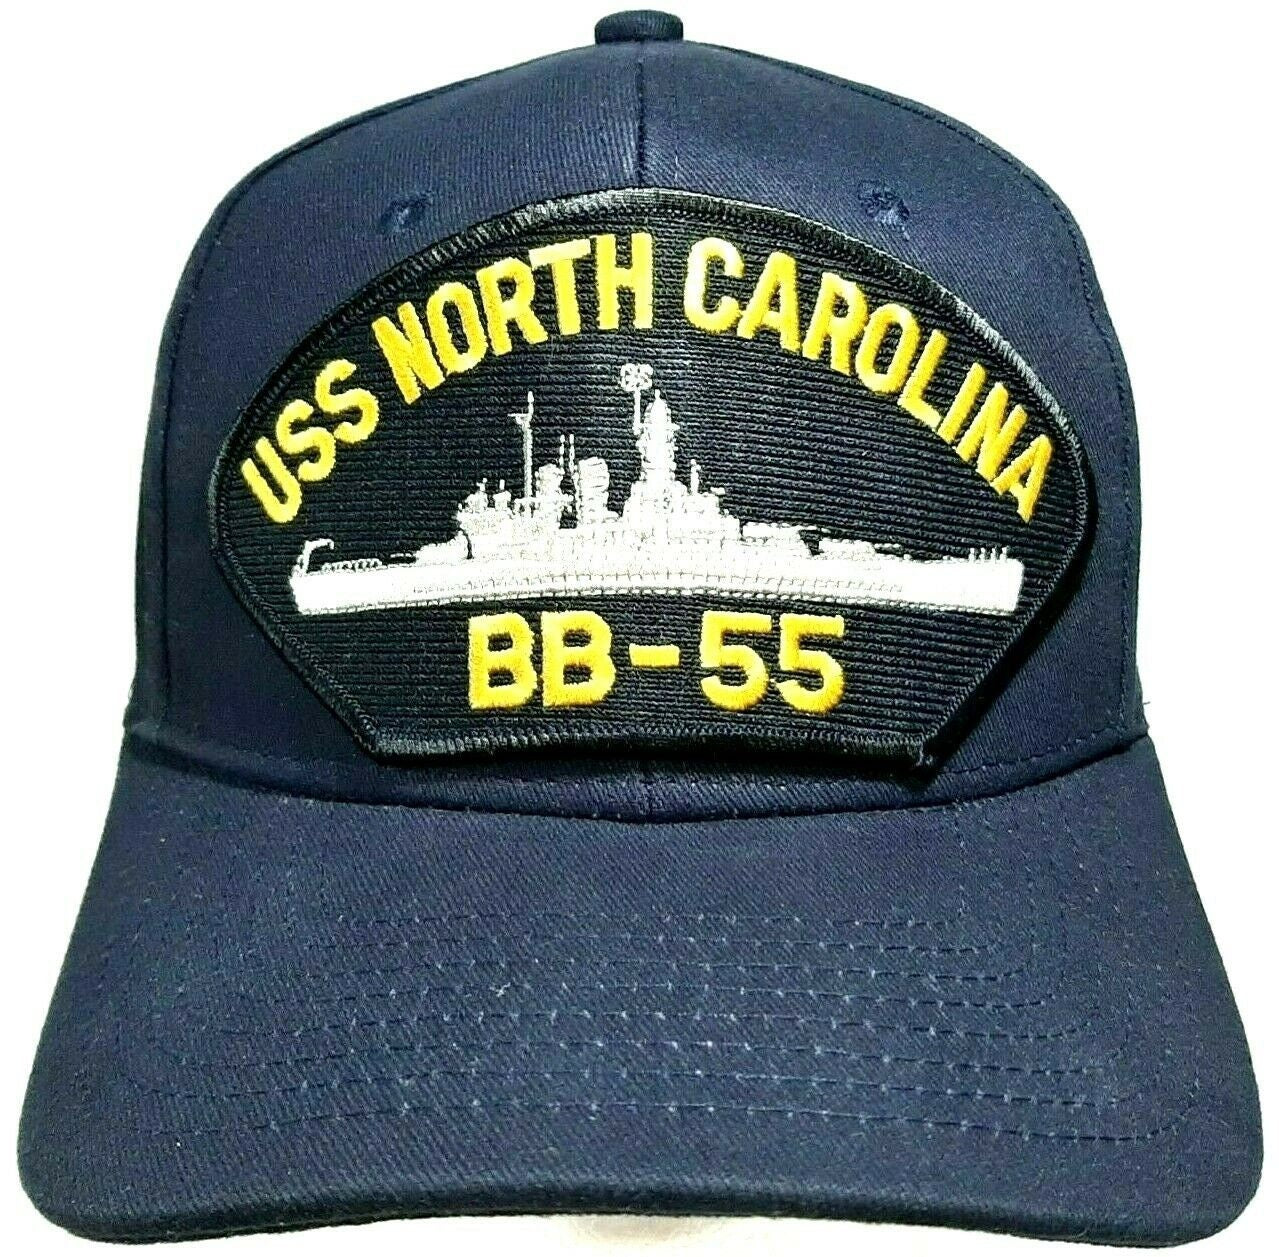 USS North Carolina BB-55 Patch Hat Baseball Cap Adjustable Navy Blue Acrylic